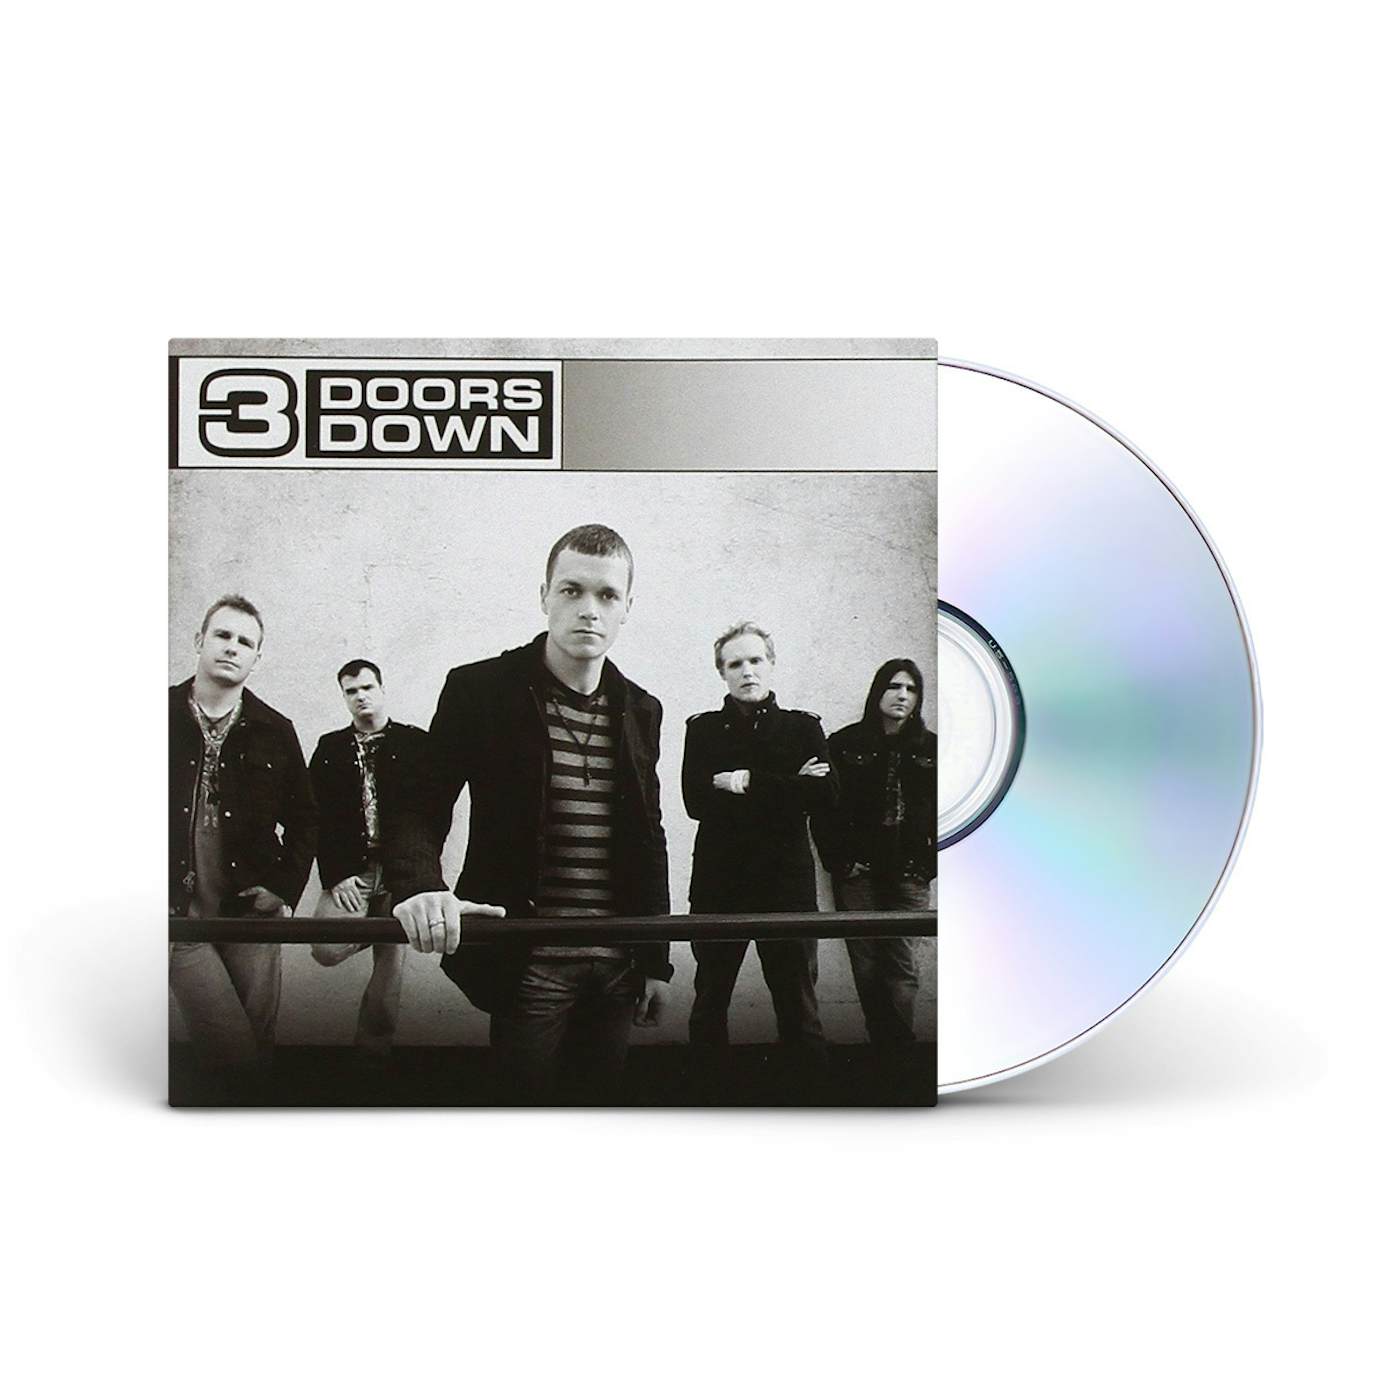 3 Doors Down Self Titled CD